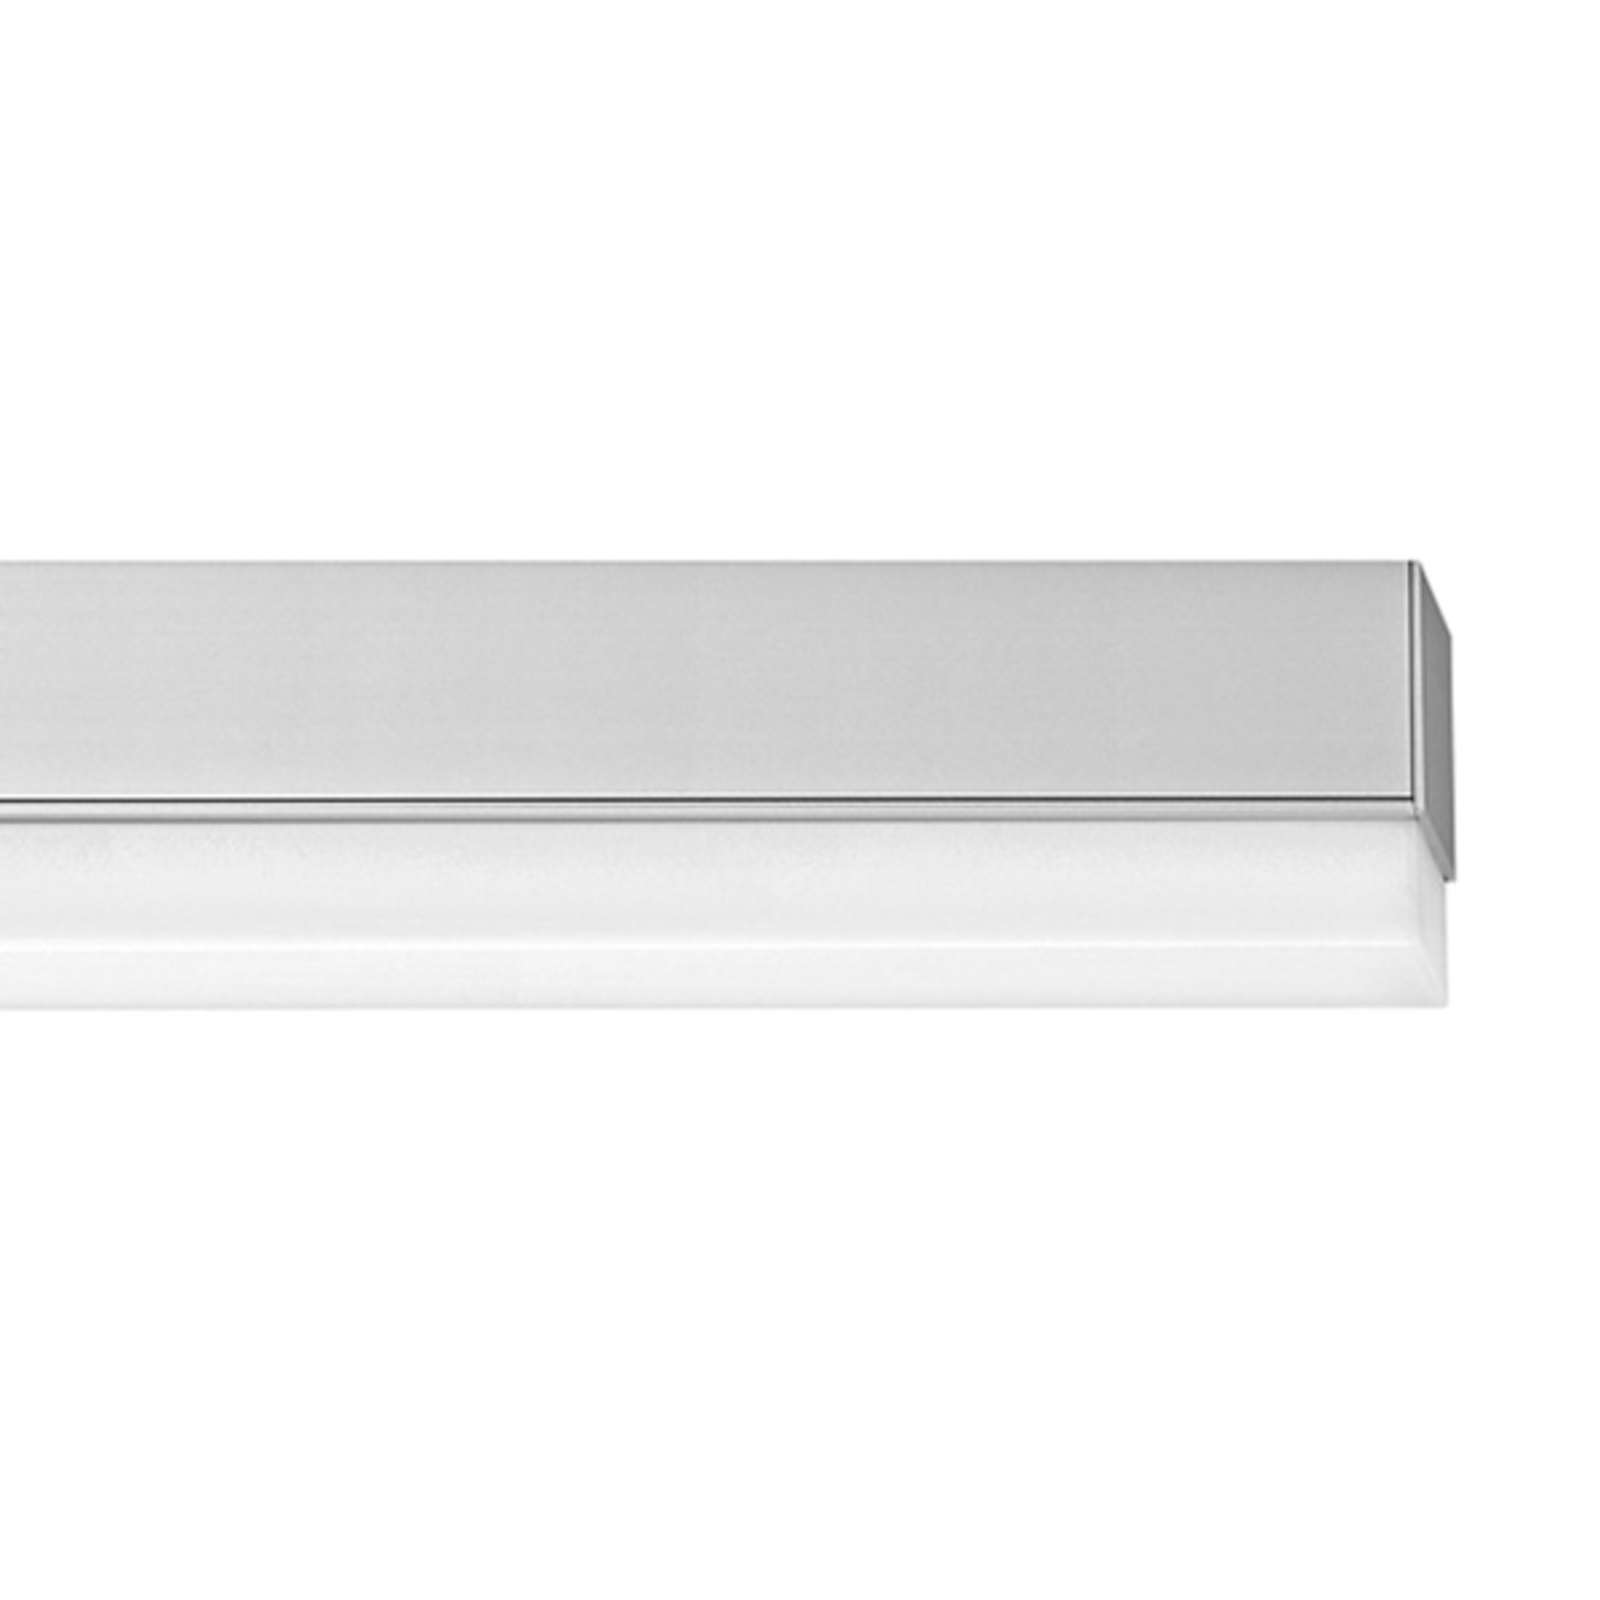 Ribag Metron plafonnier LED 60 cm bc alu dimmable